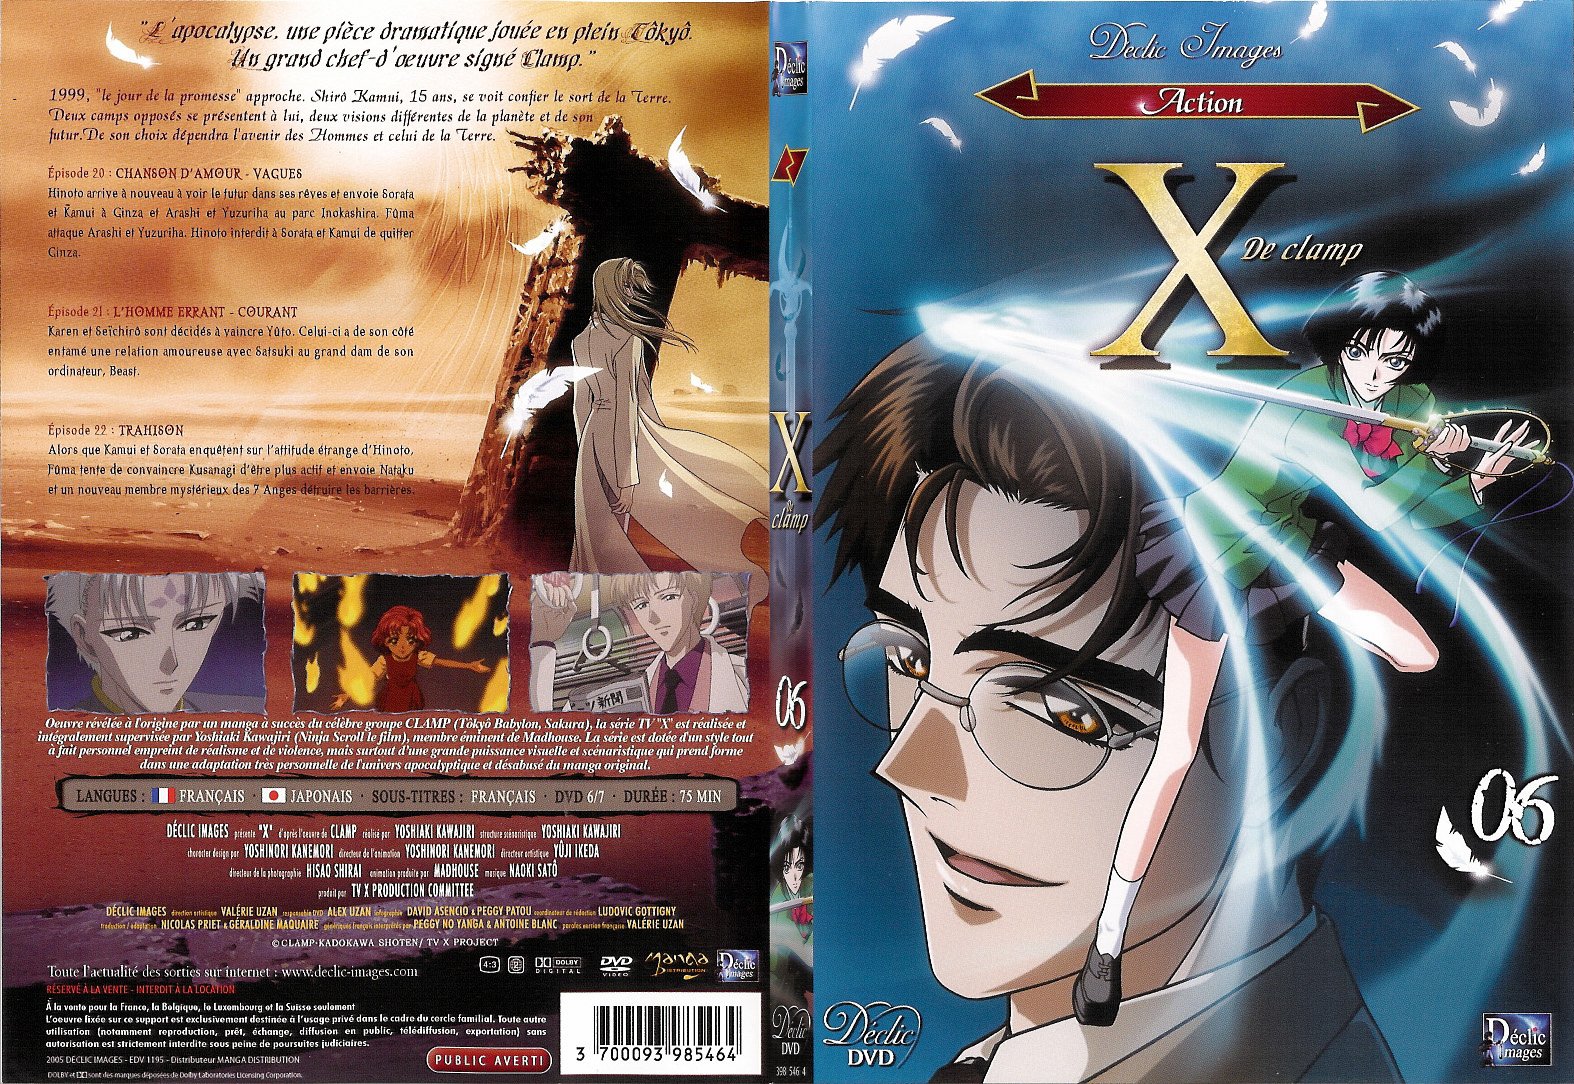 Jaquette DVD X de clamp vol 6 - SLIM